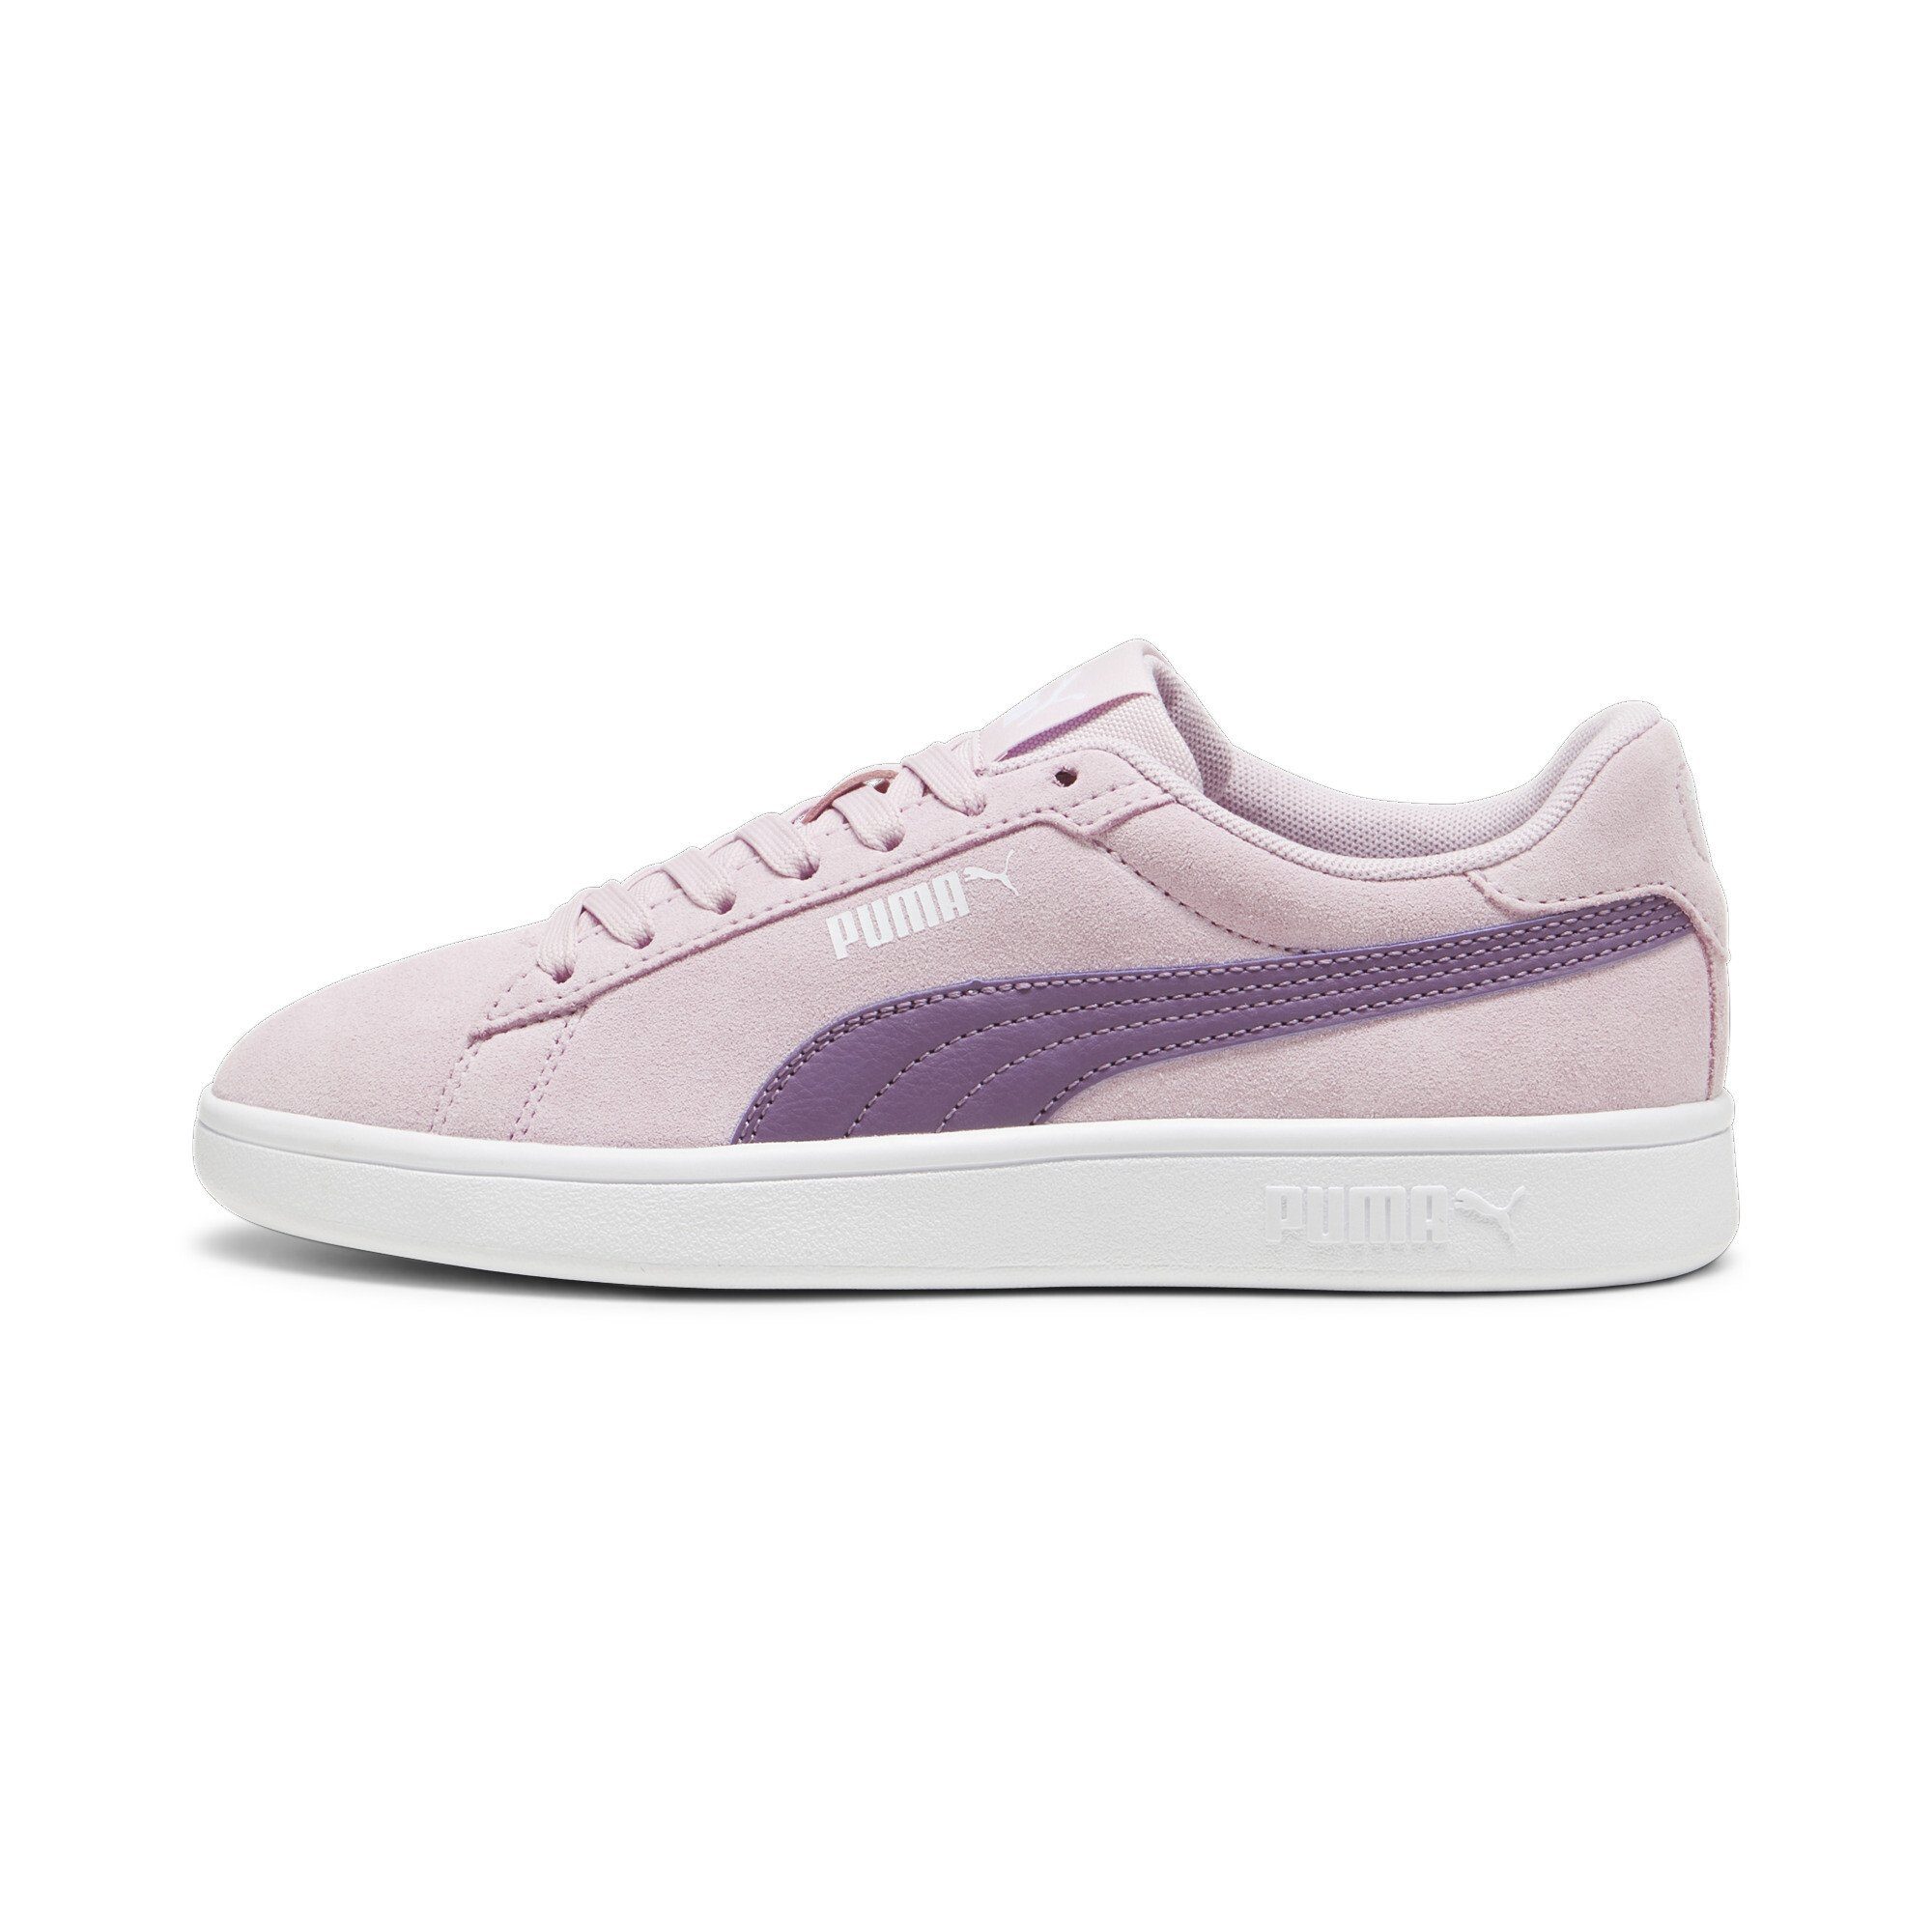 PUMA Sneaker Jugendliche Suede Grape White Purple Smash Berry Sneakers Mist 3.0 Crushed